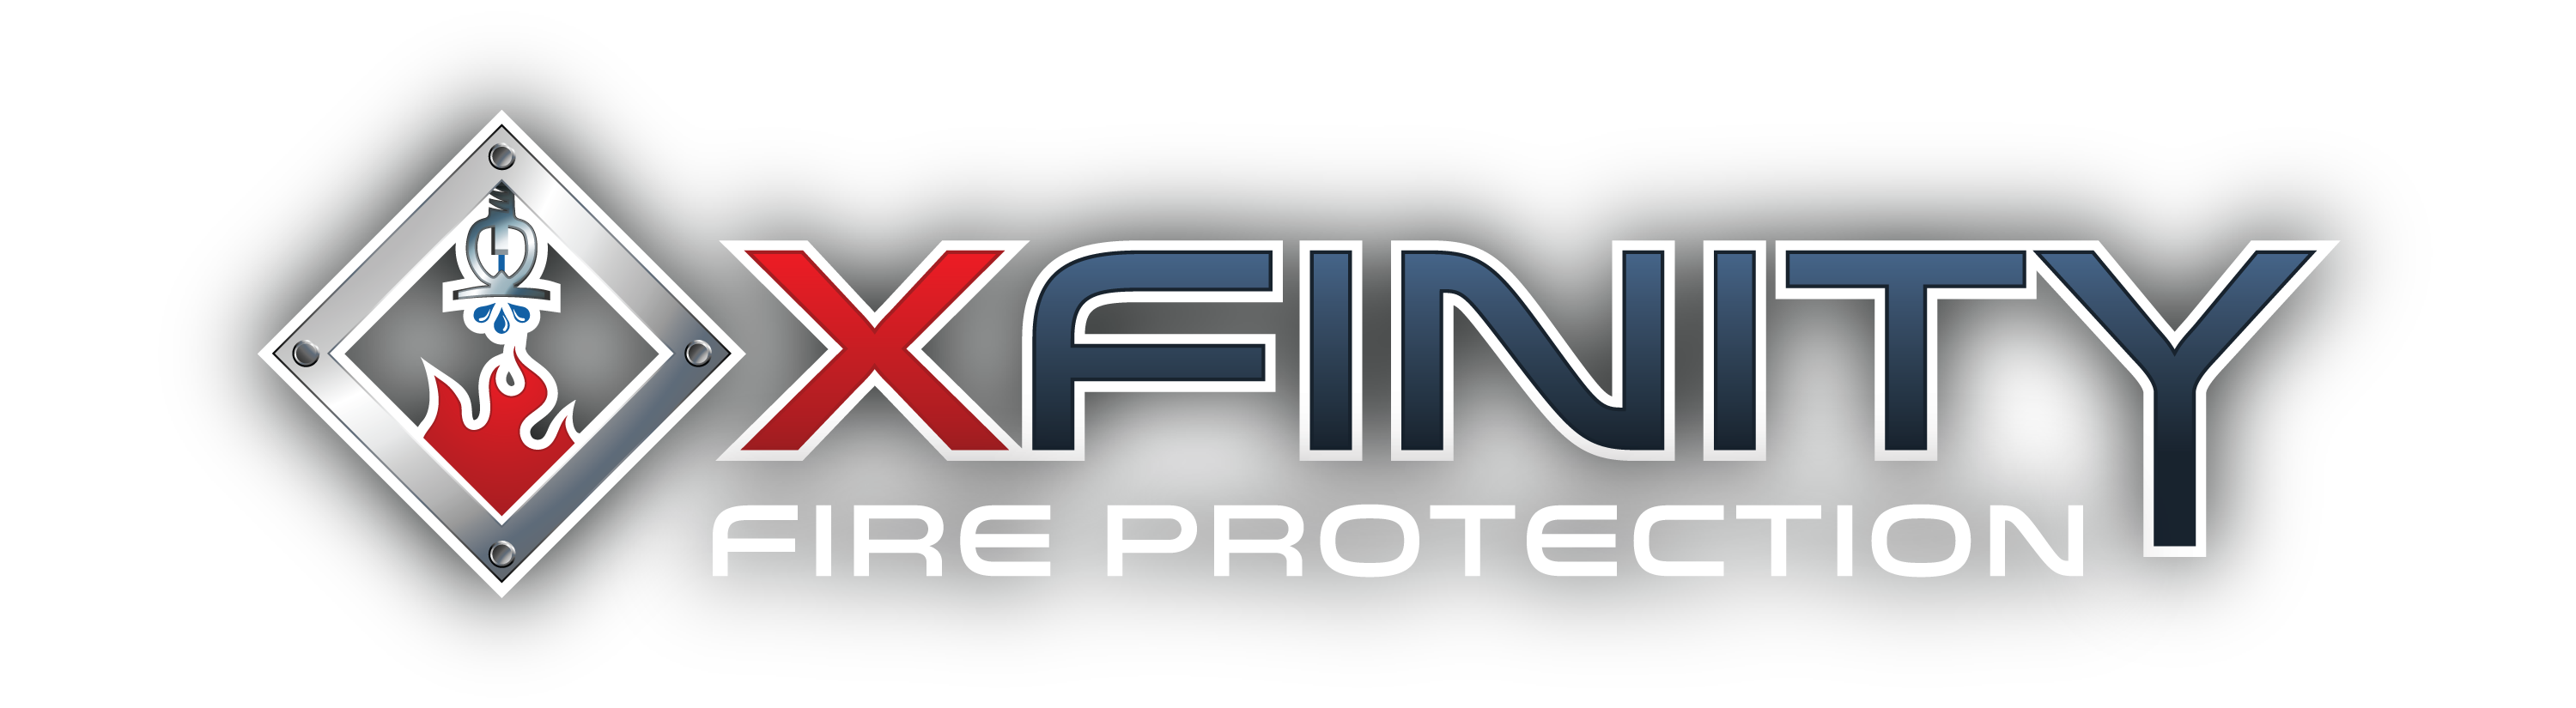 xfinity fire protection